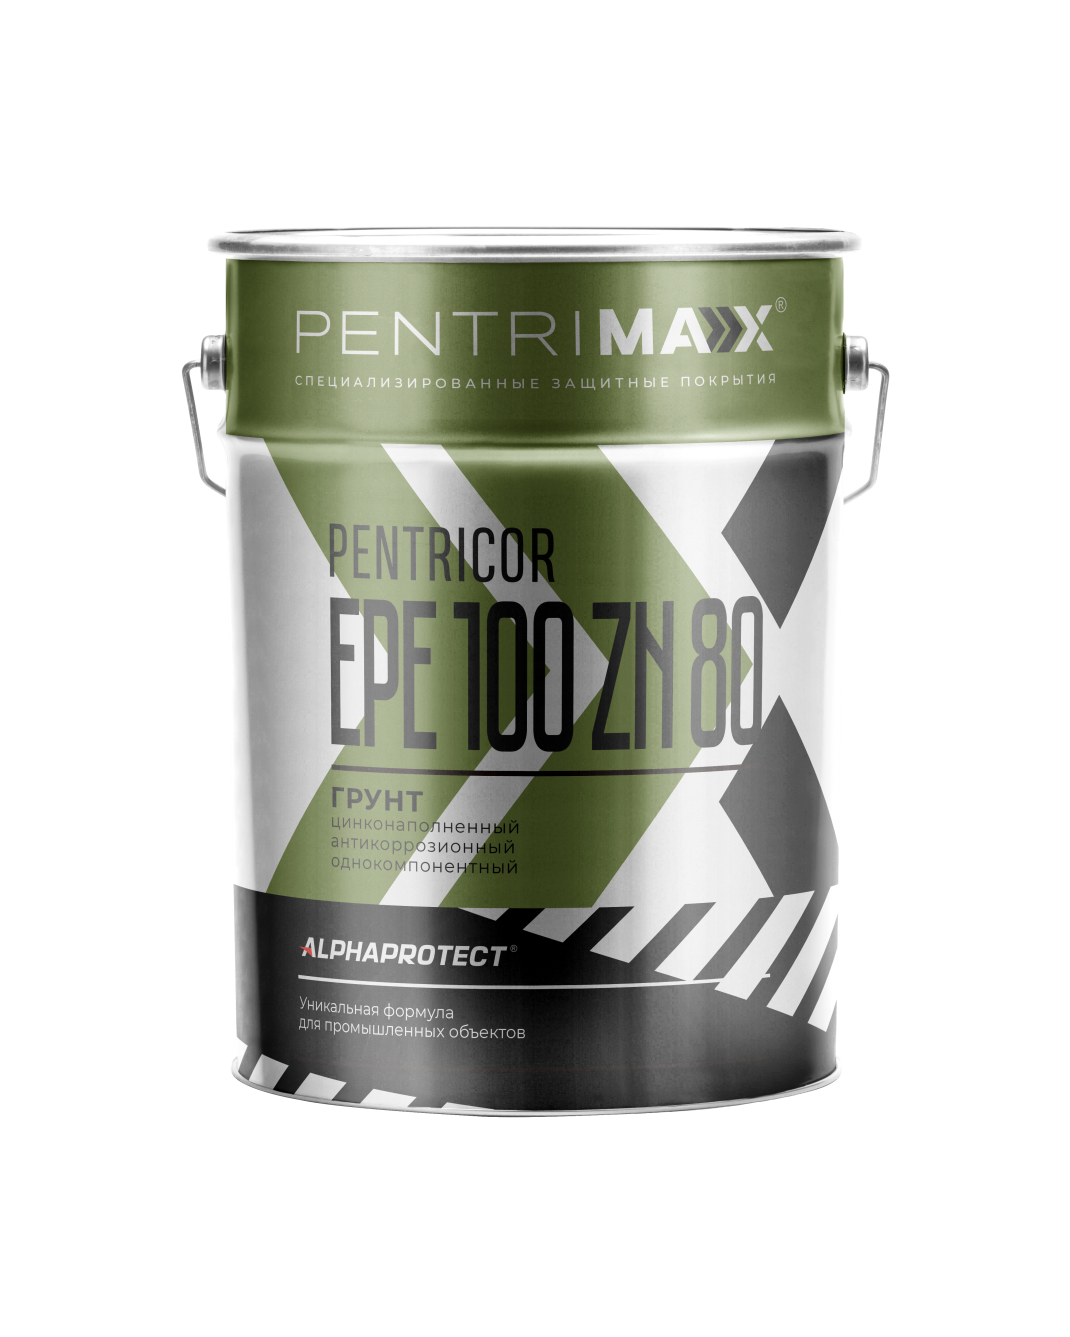 Цинконаполненный грунт PENTRICOR EPE 100 Zn 80